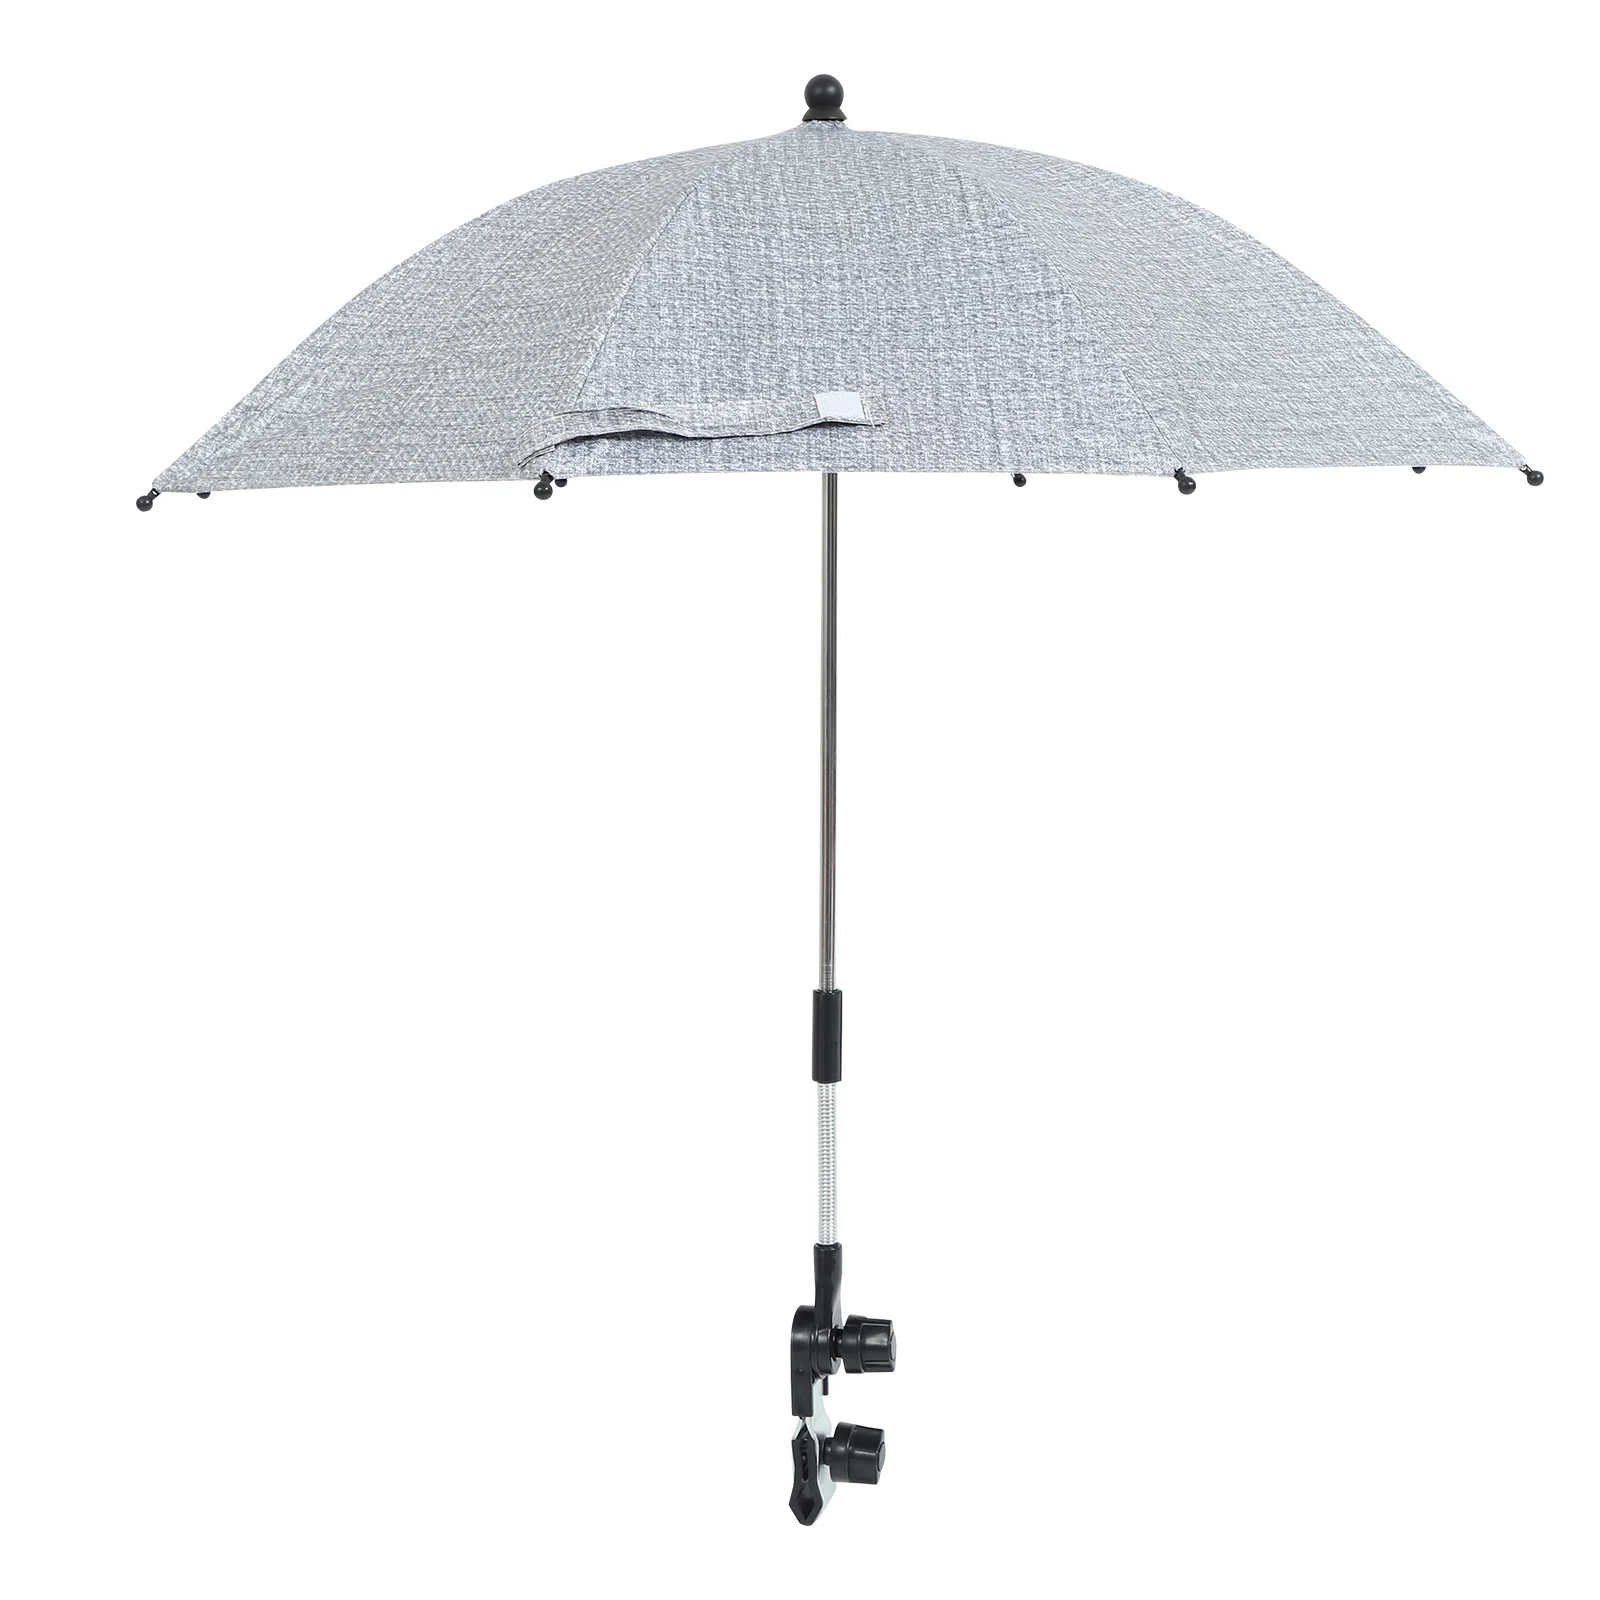 Pushchair Umbrella Stroller Shade Toddler Rain Baby Sun Protection Cover Beach Cart Supplies enlarge